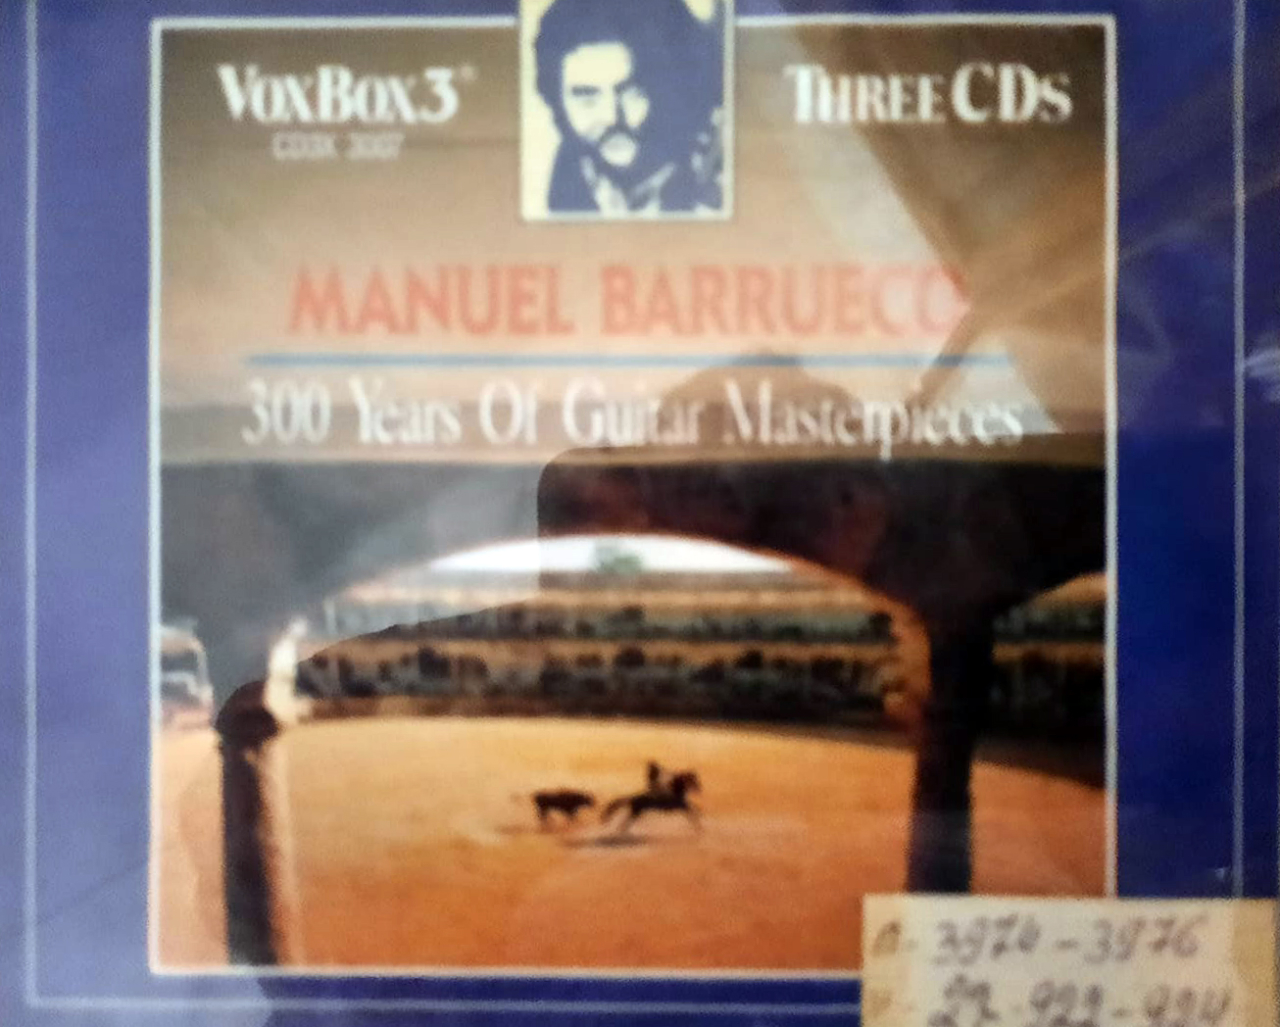 Manuel Barrueco. 3  Years Of Guitar Masterpieces